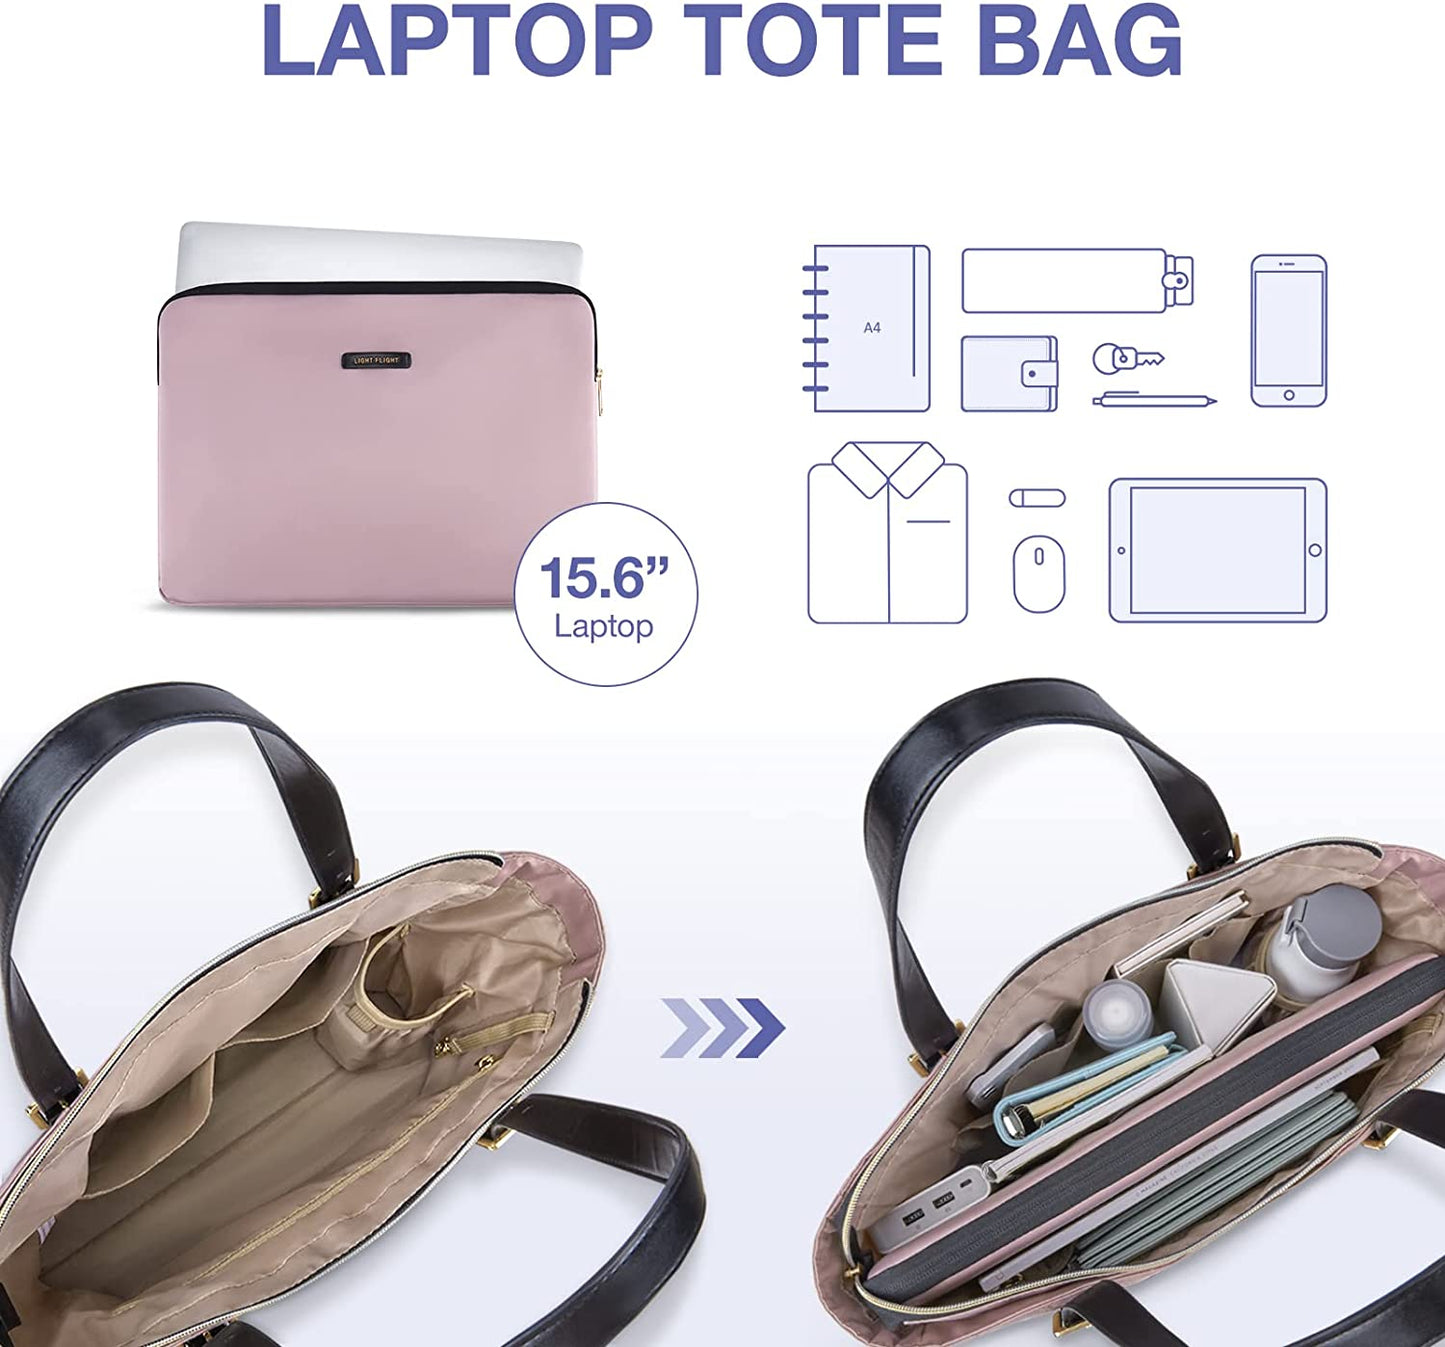 Tote Bag for Women, LIGHT FLIGHT Large Shoulder Bag with Laptop Sleeve Fits 15.6 Inch, 2pcs Set for Work, School